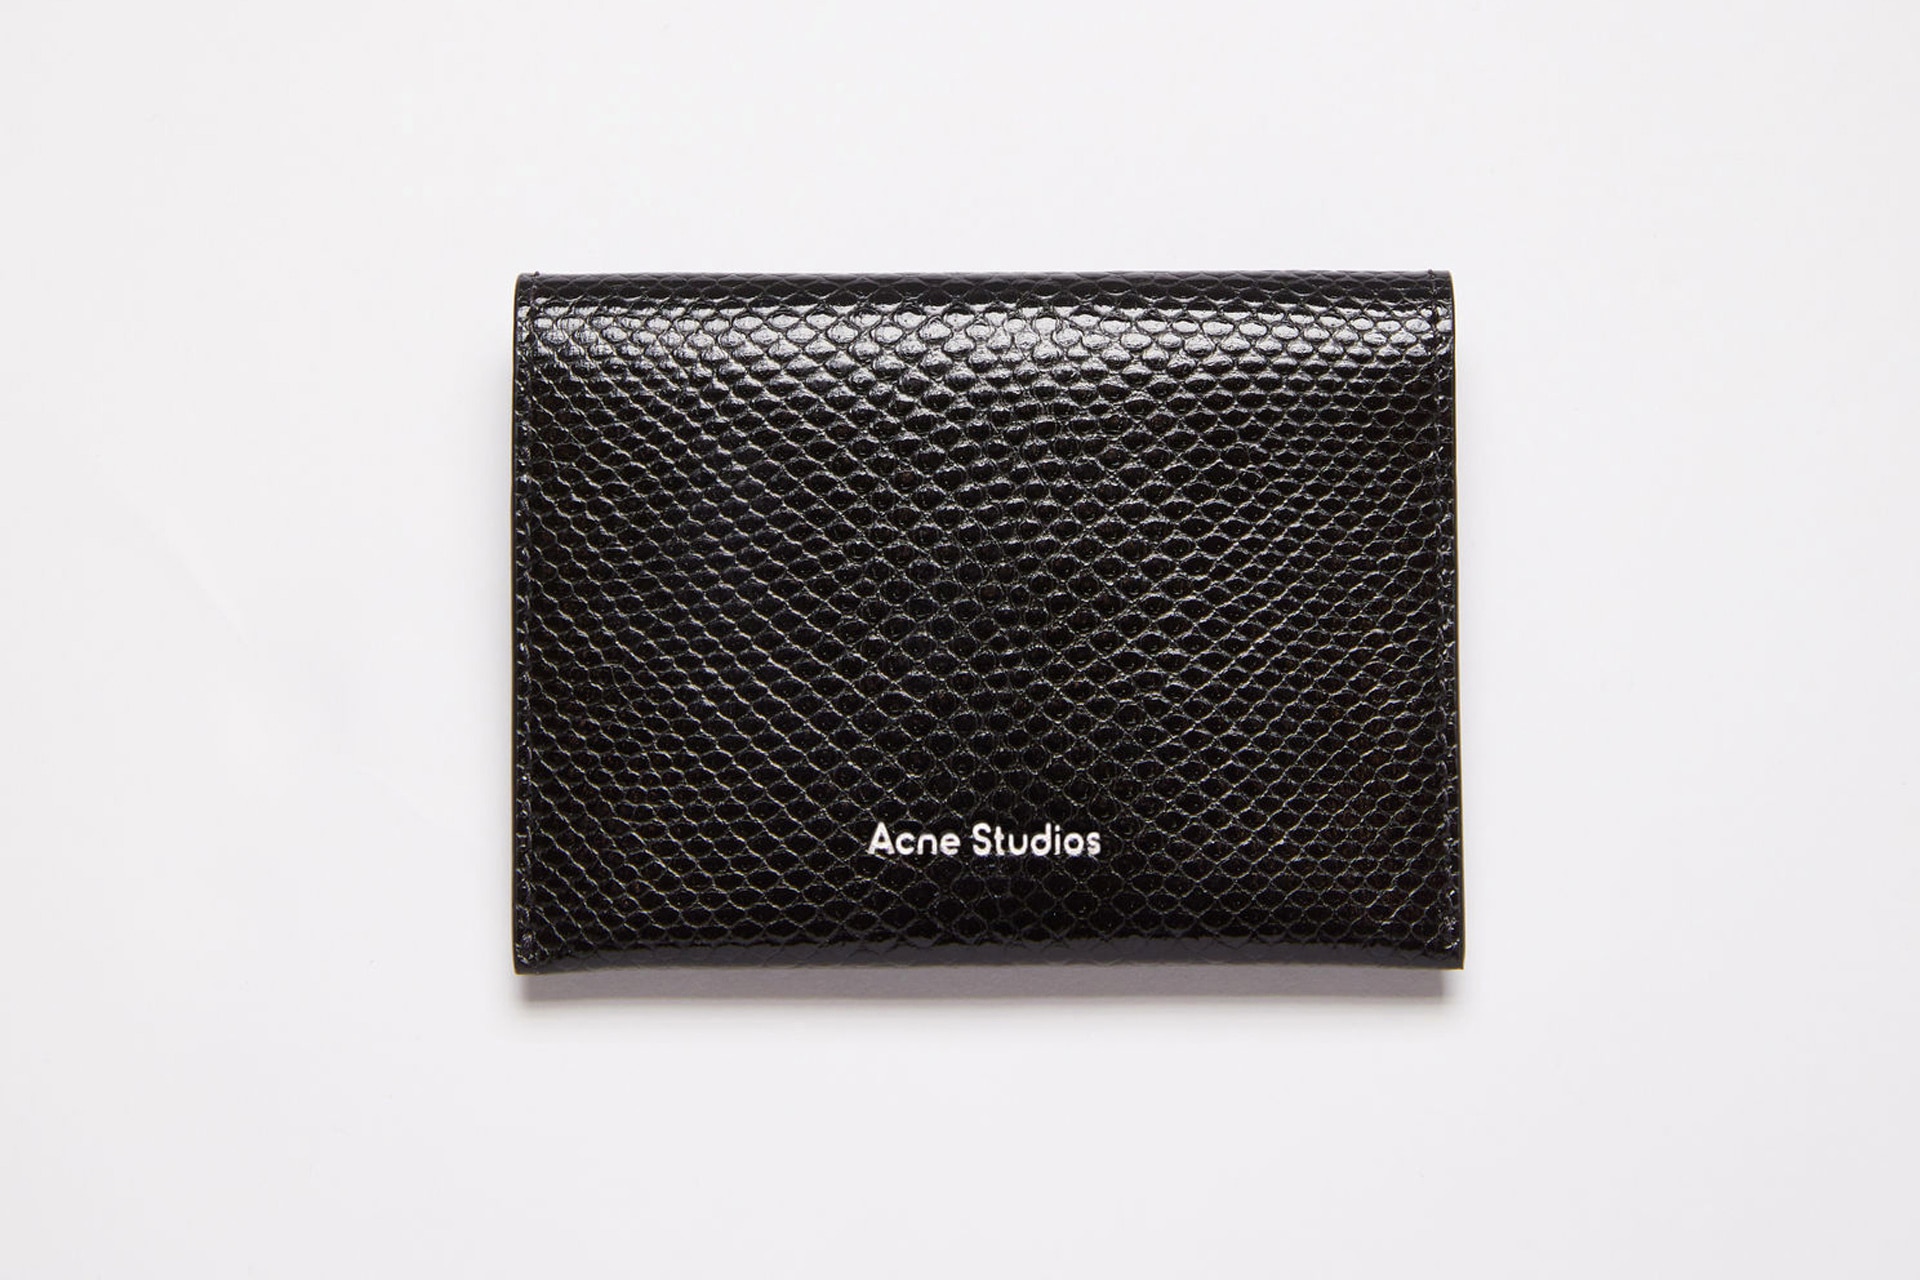 Famous Luxury Men's Leather Wallet